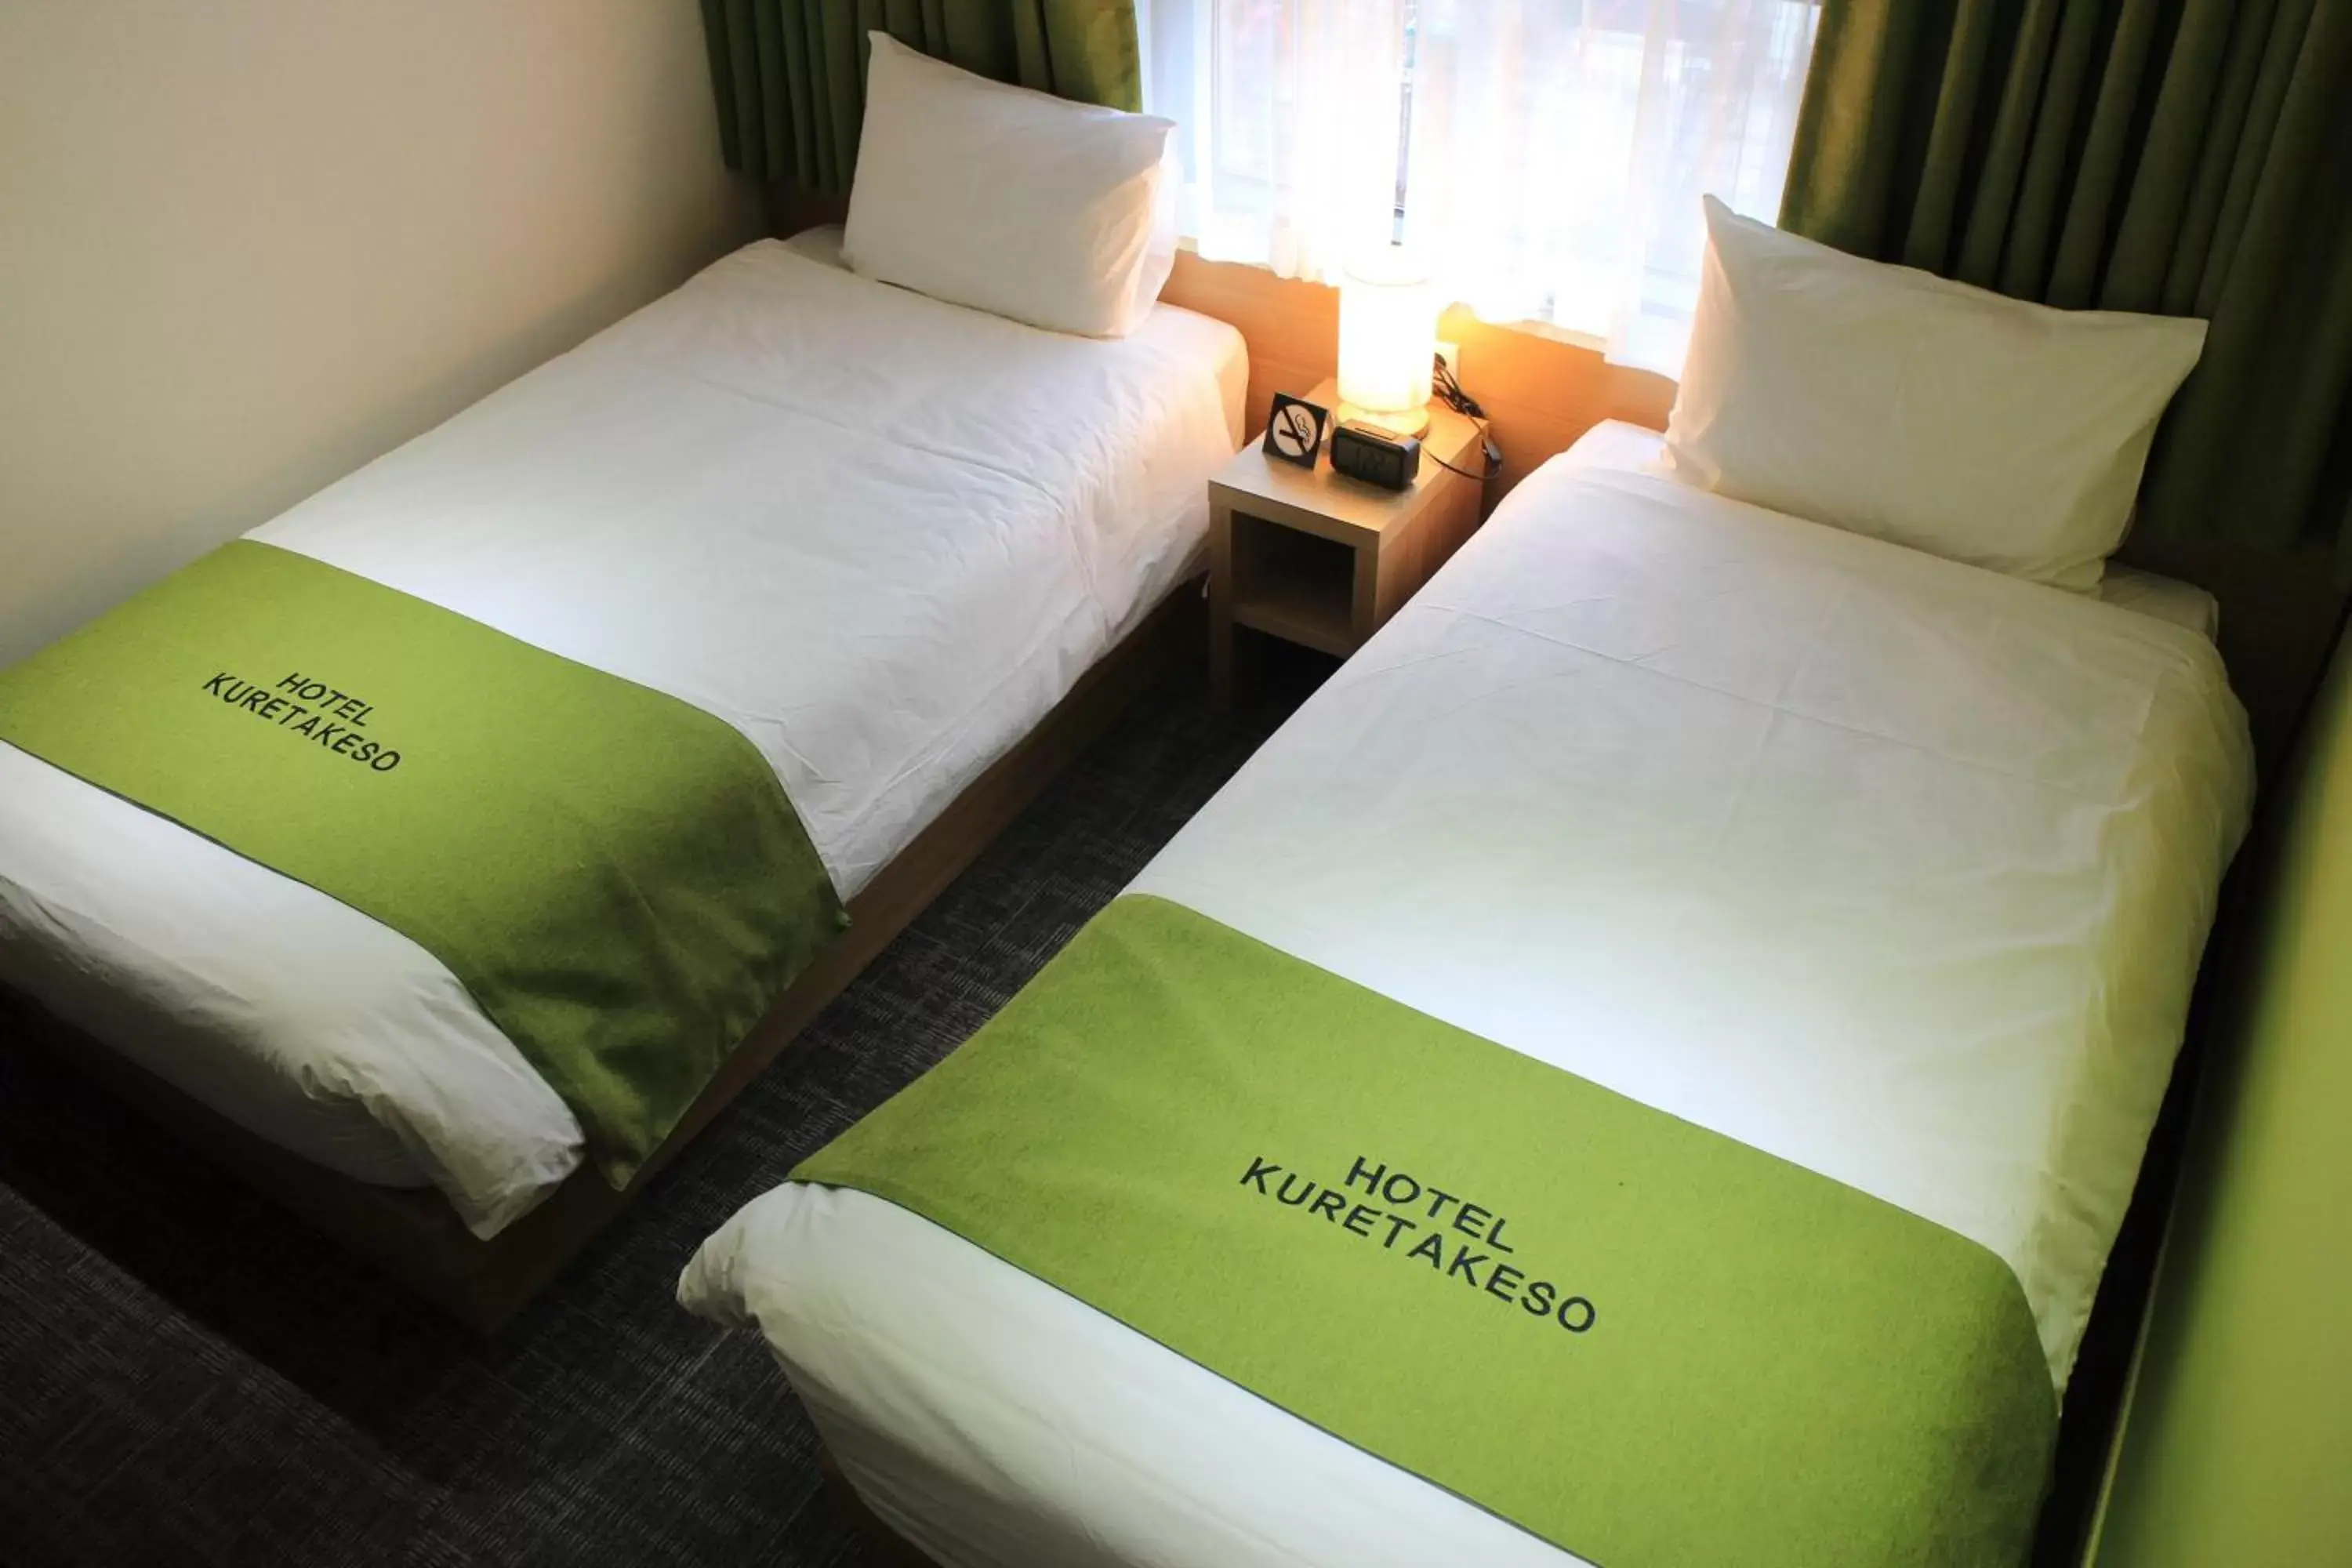 Bed in Hotel Kuretakeso Insadong